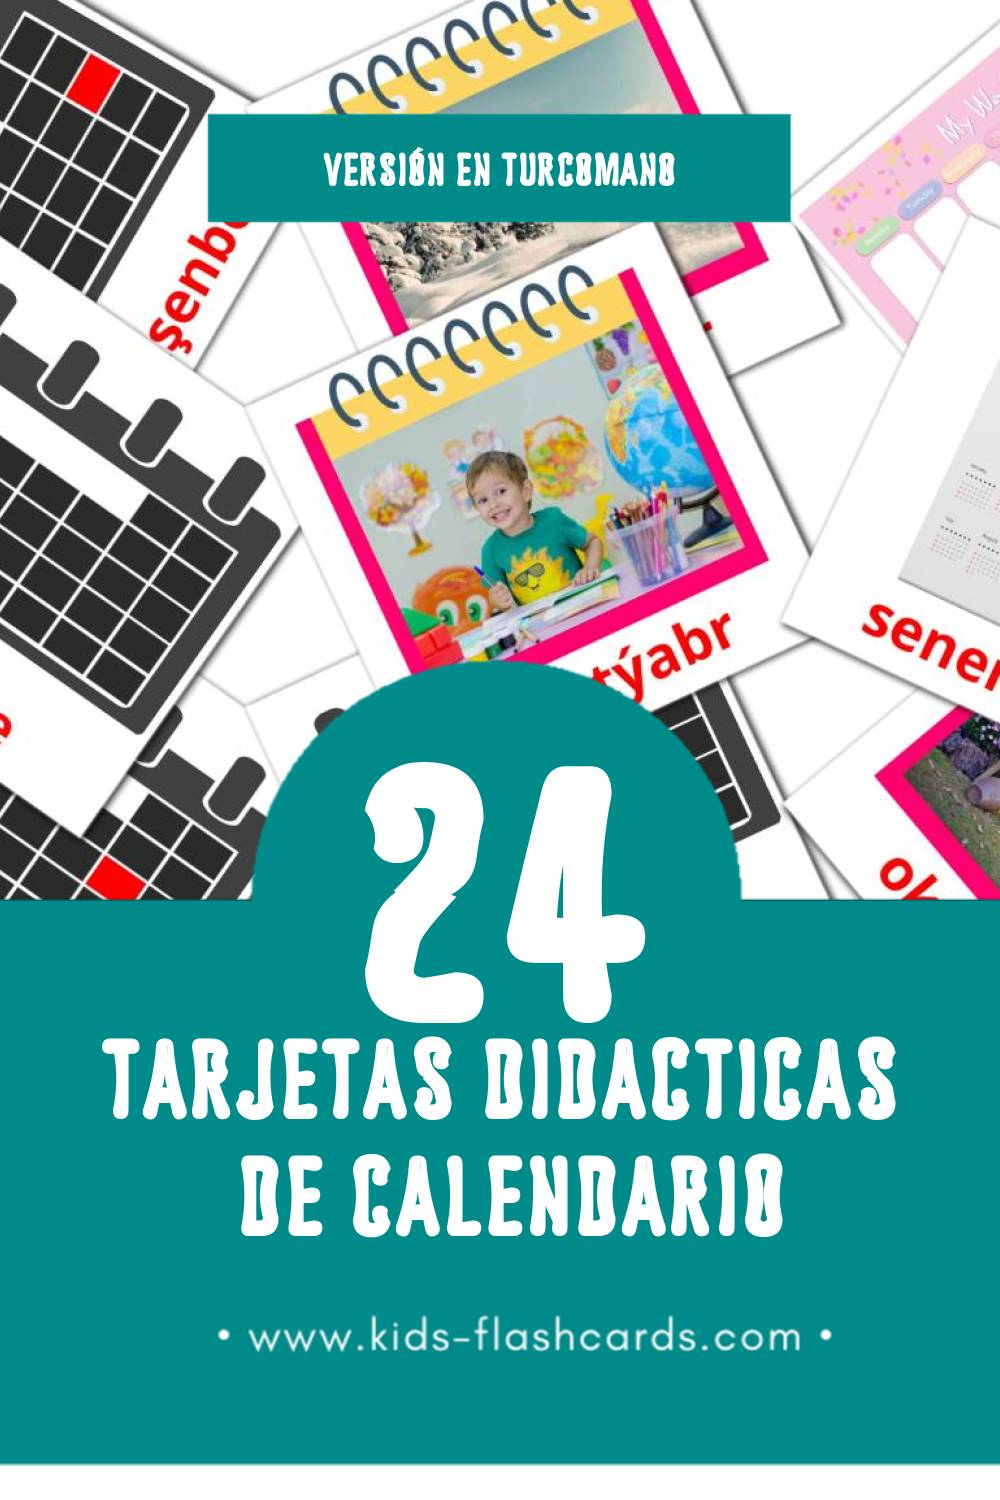 Tarjetas visuales de Kalendar para niños pequeños (24 tarjetas en Turcomano)